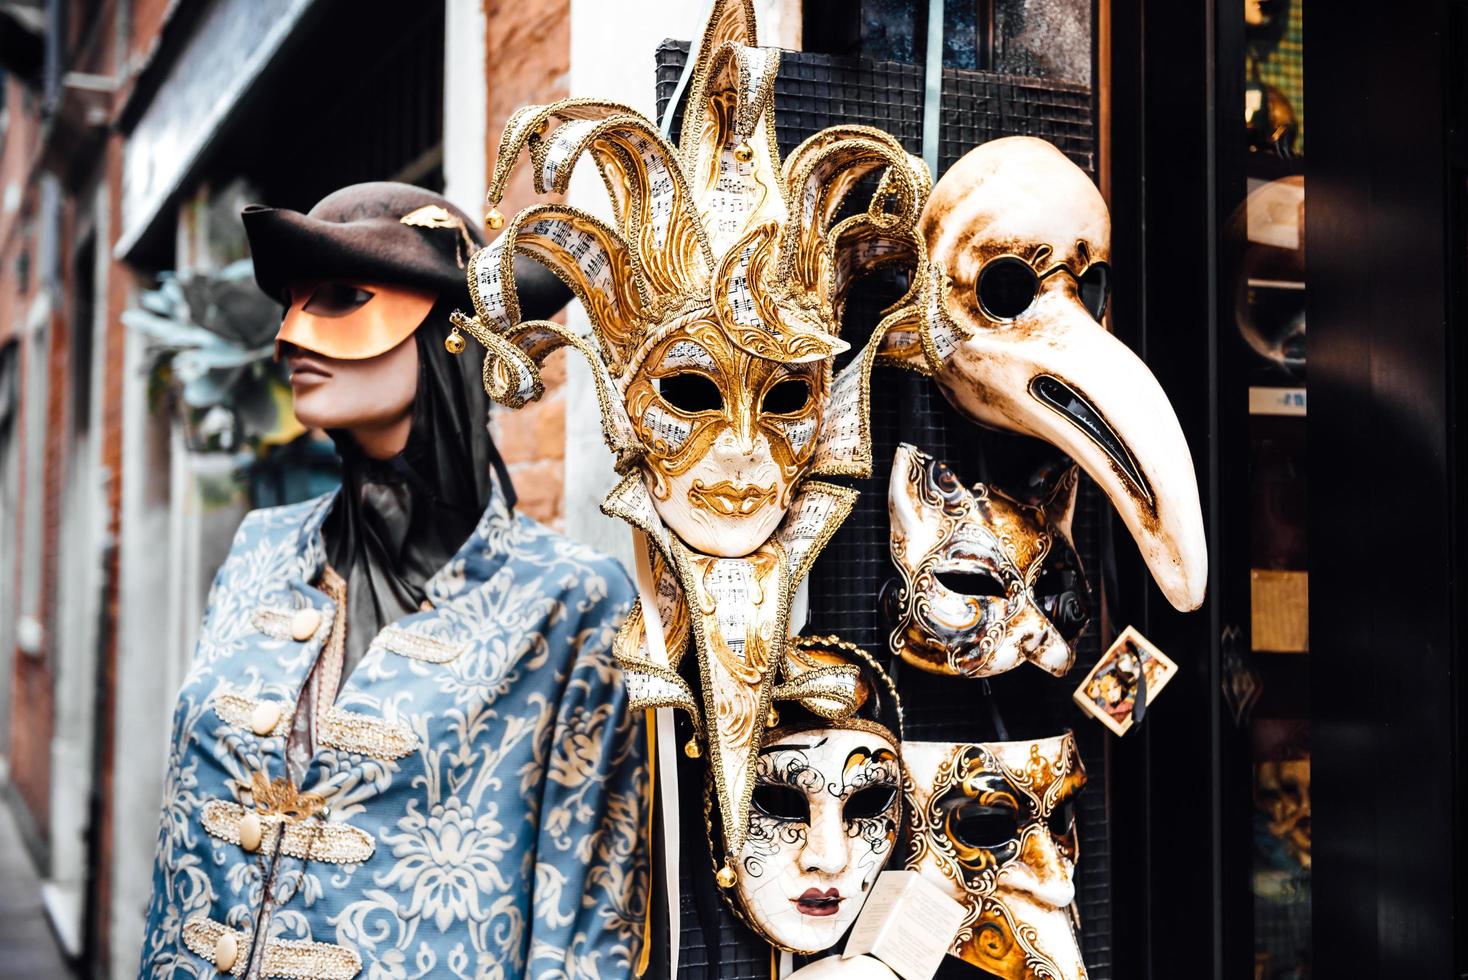 venezia, italia 2017 - vetrina veneziana con maschere foto